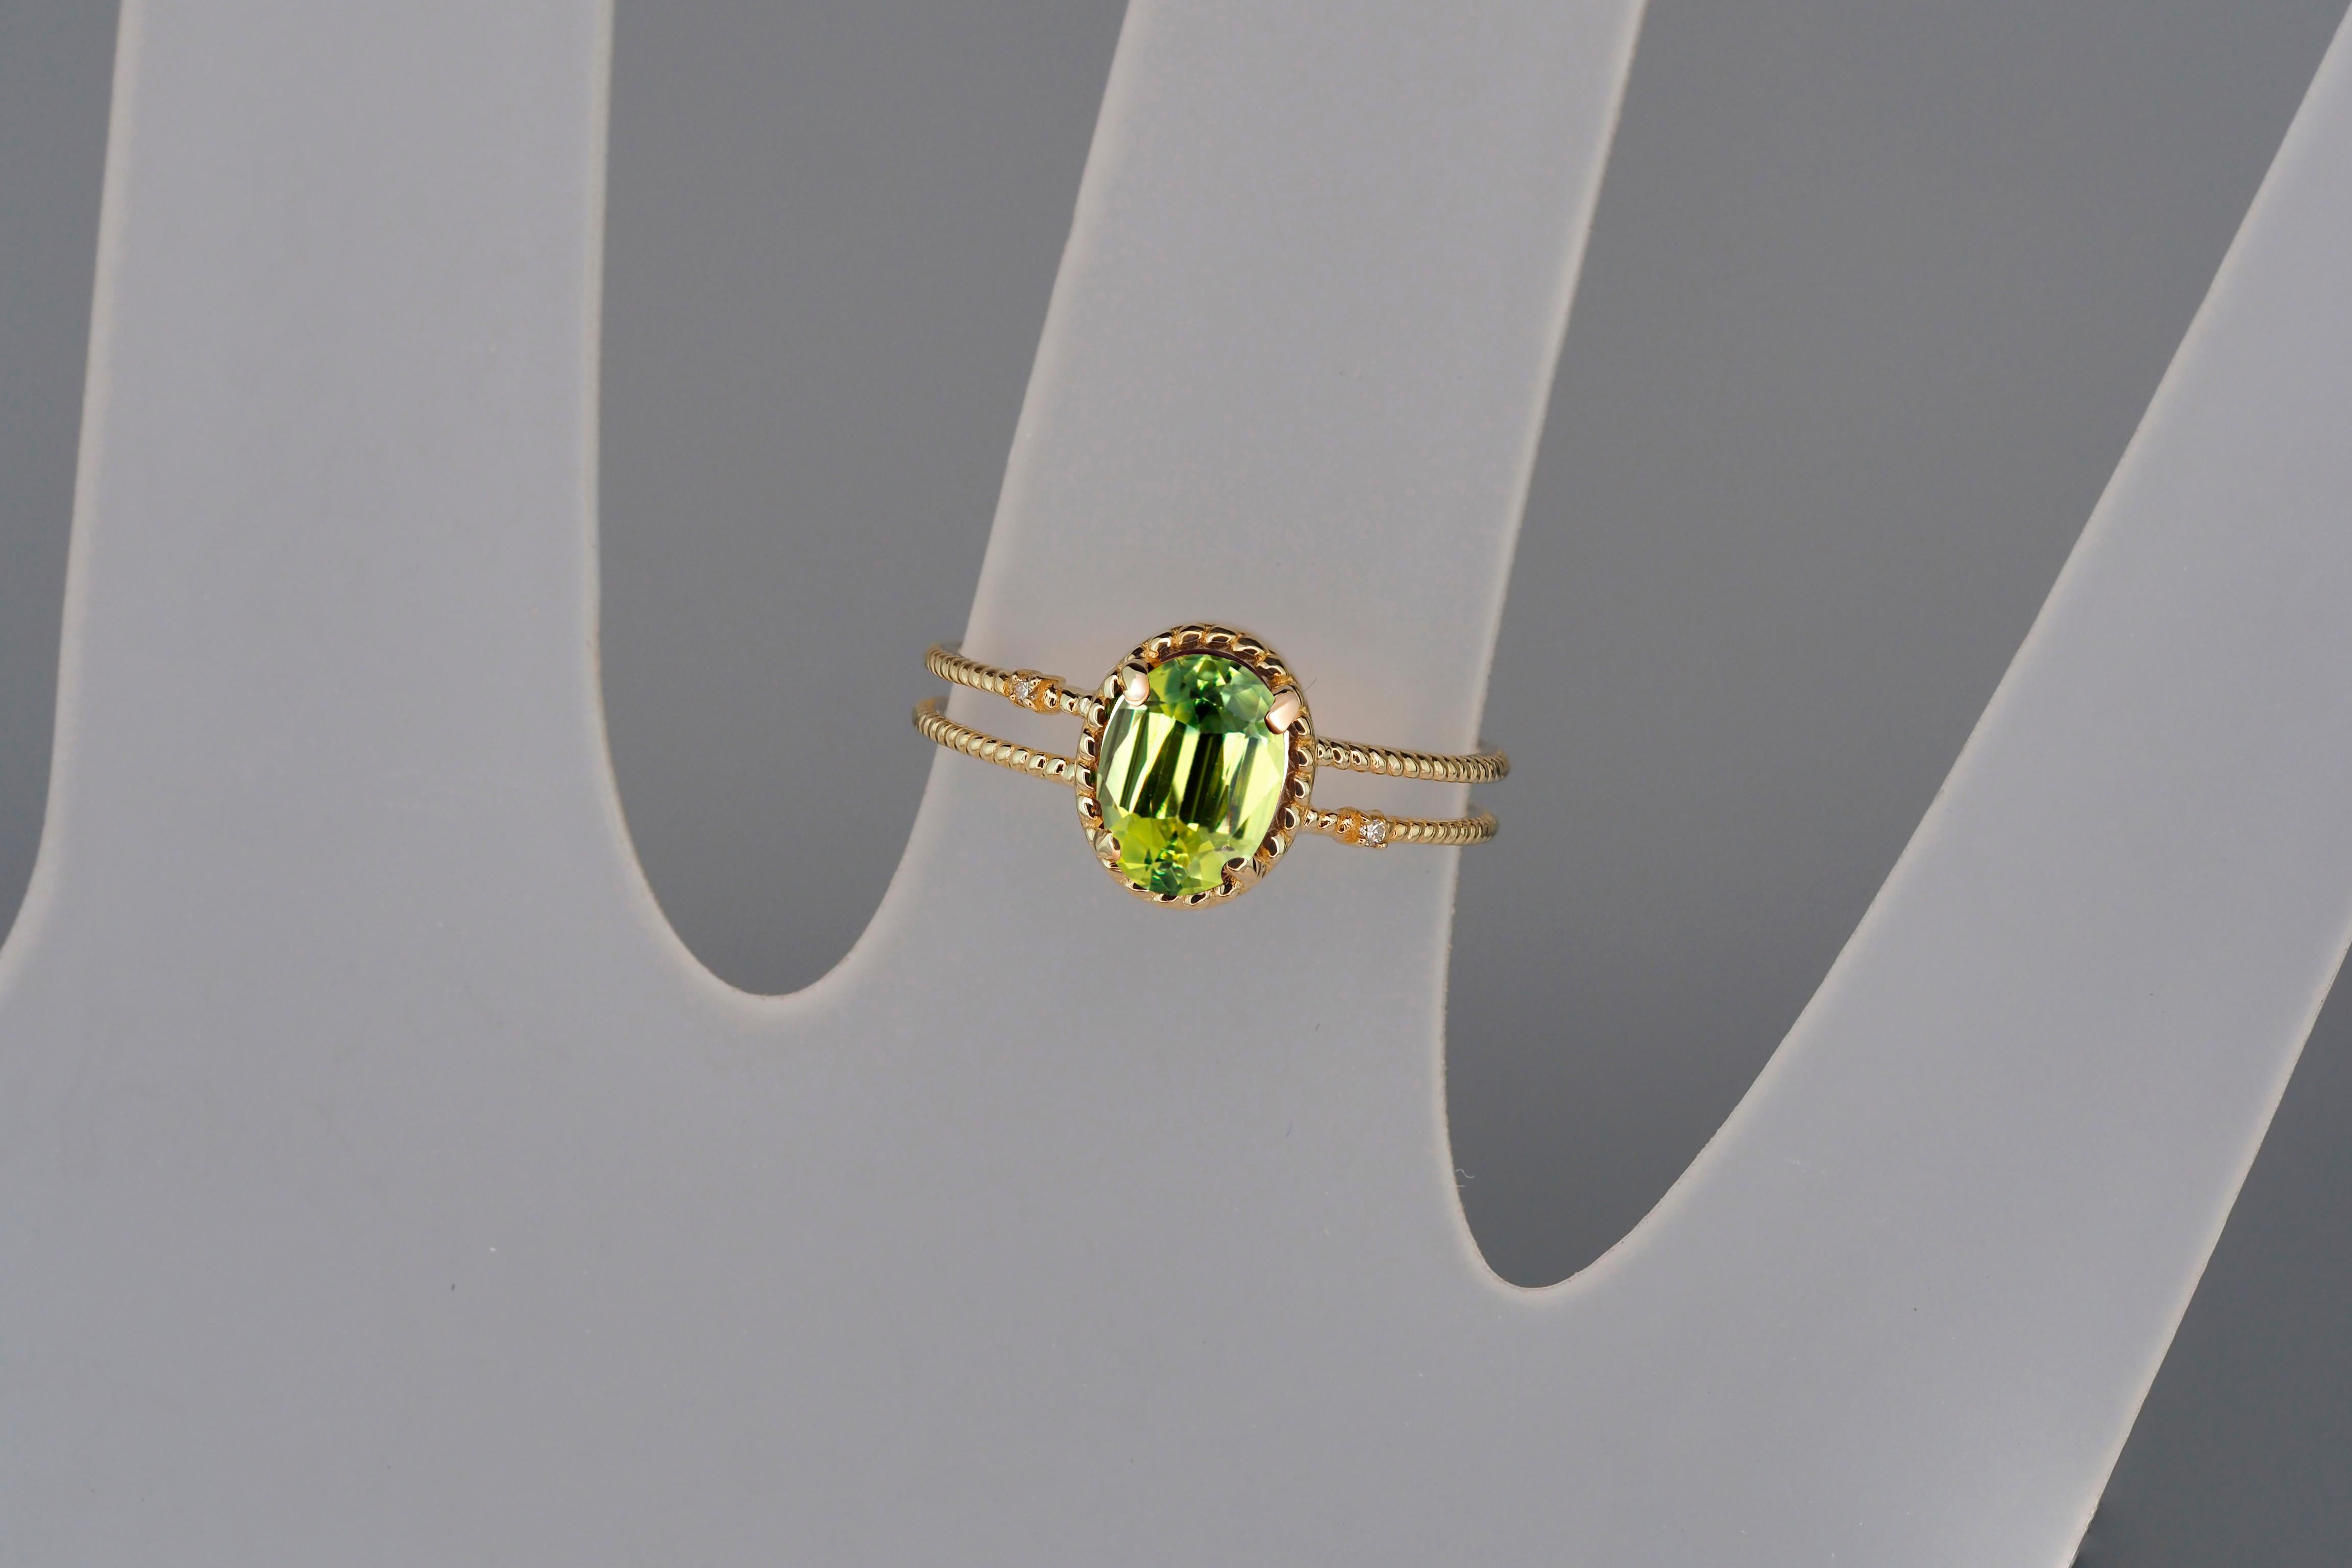 For Sale:  Oval Peridot Ring, 14k Gold Ring with Peridot, Minimalist Peridot Ring 7